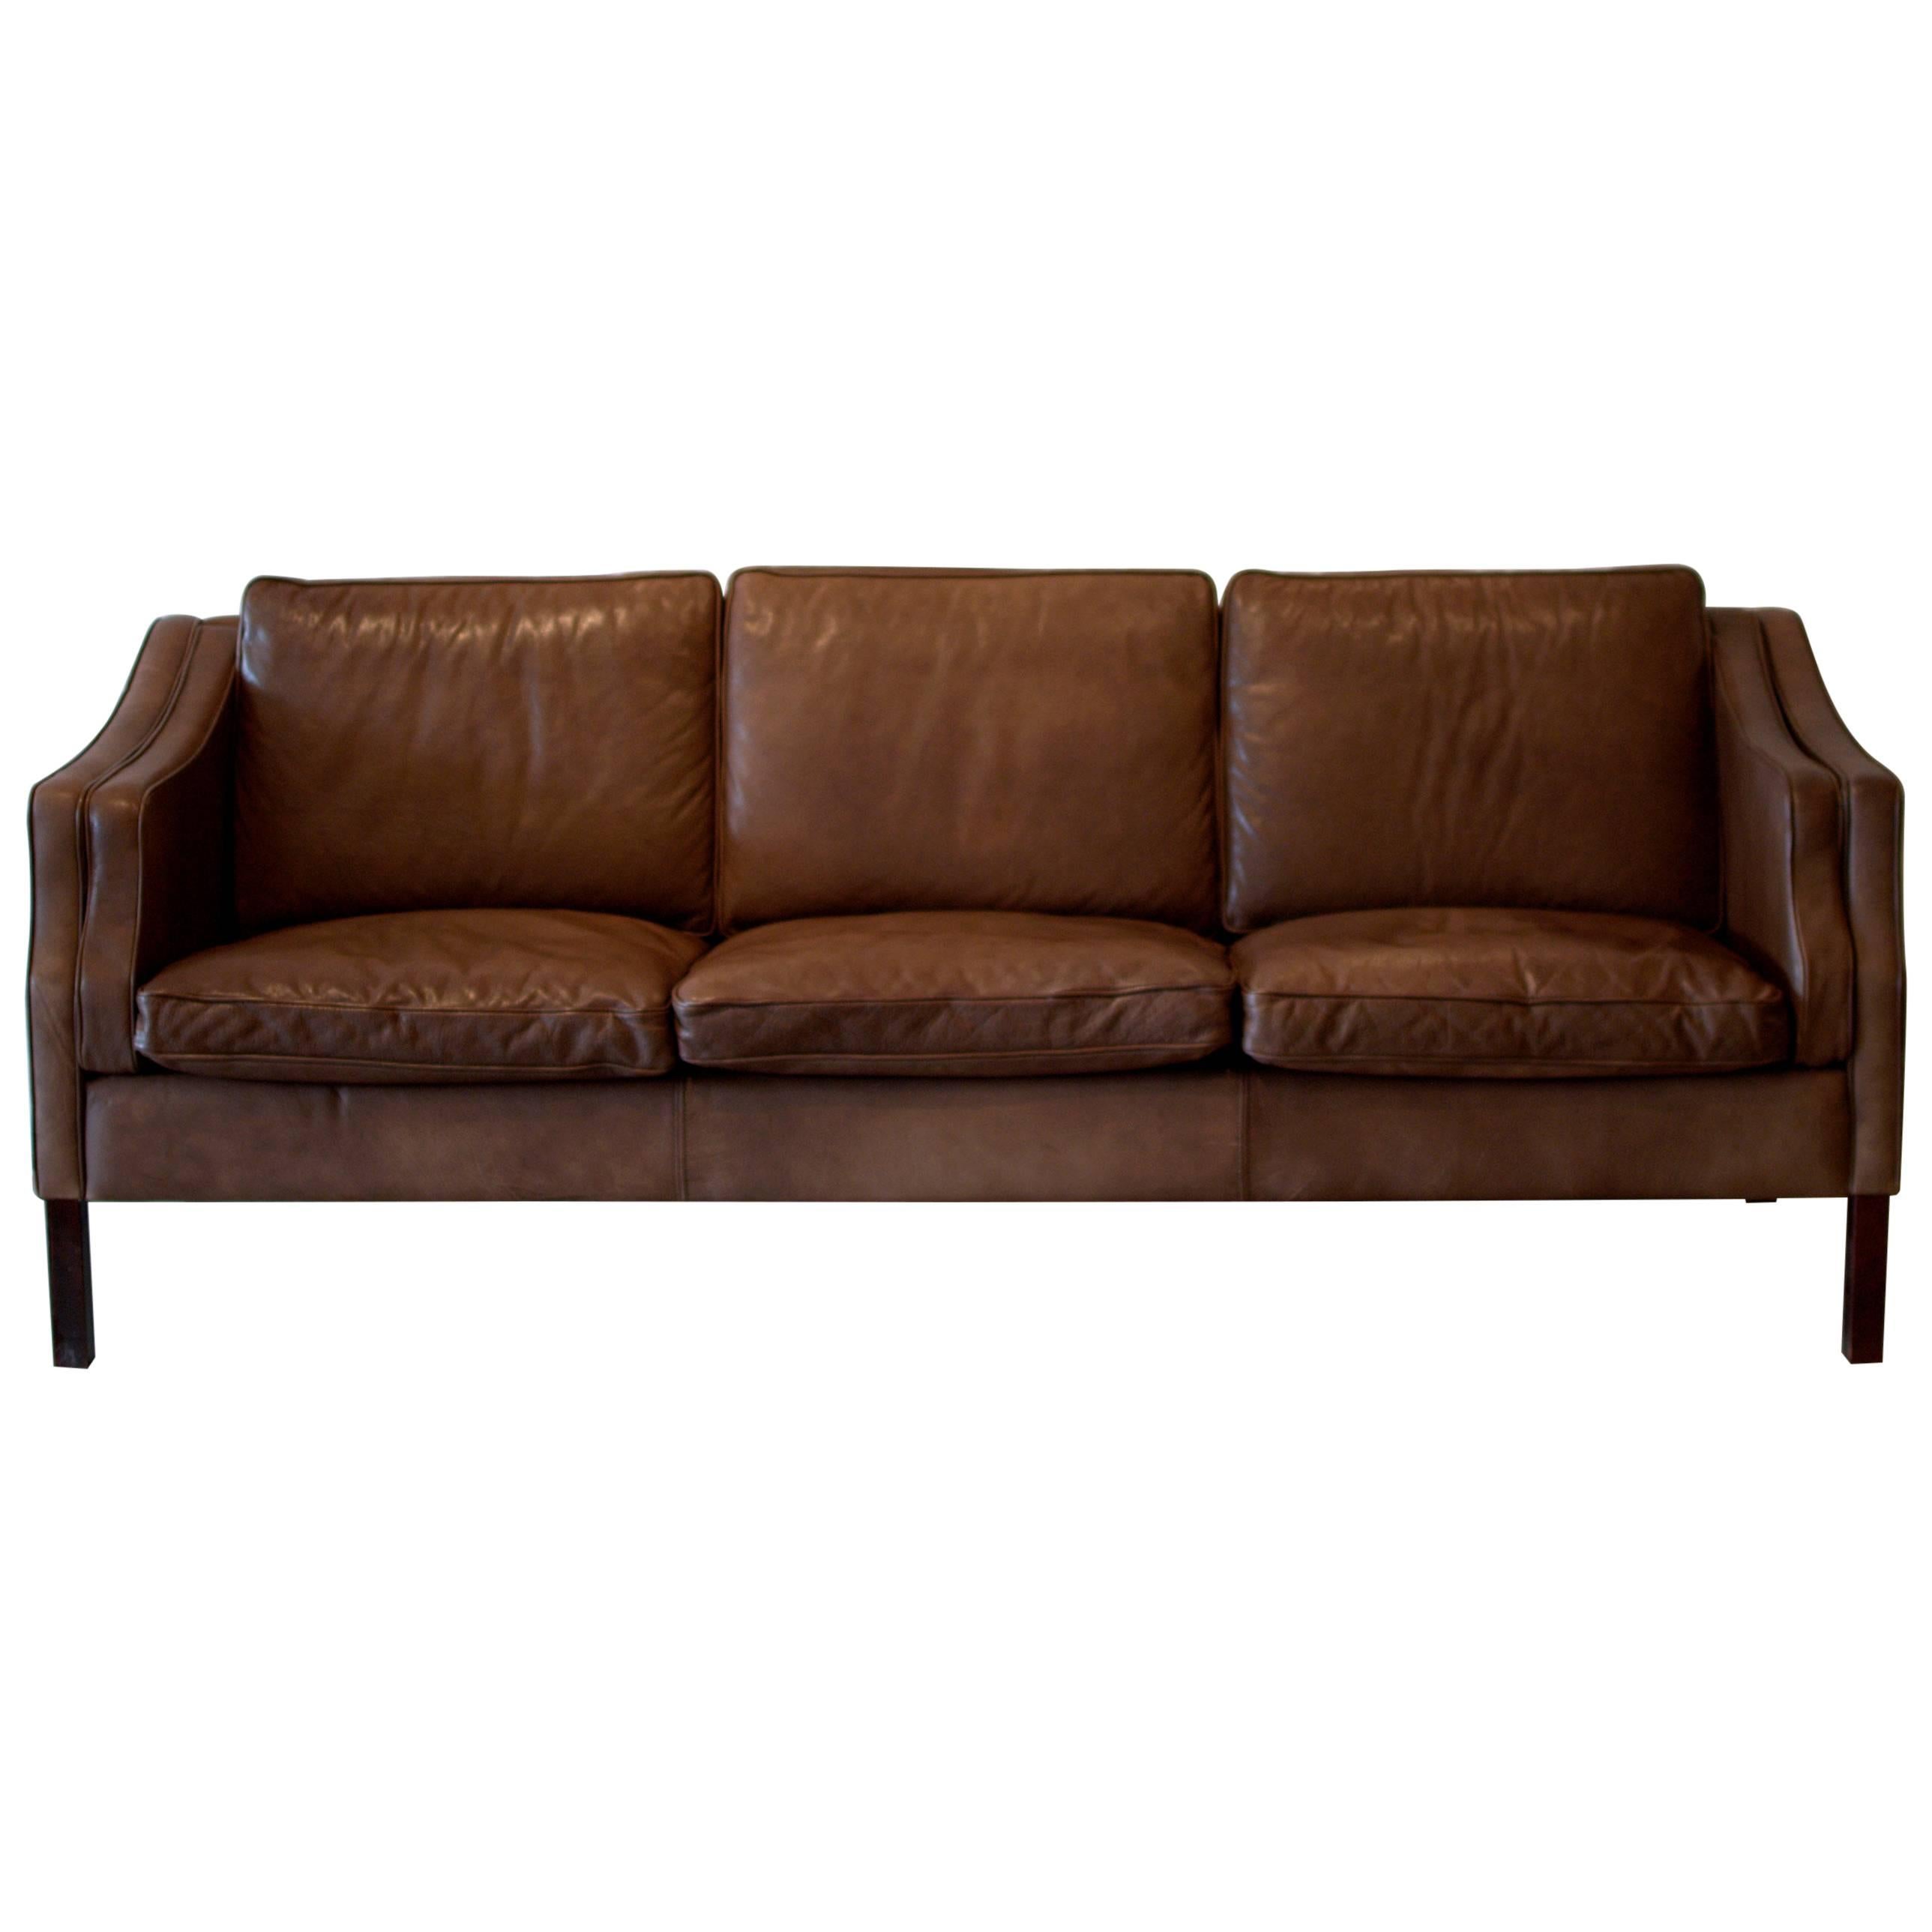 Vintage Danish Brown Leather Sofa